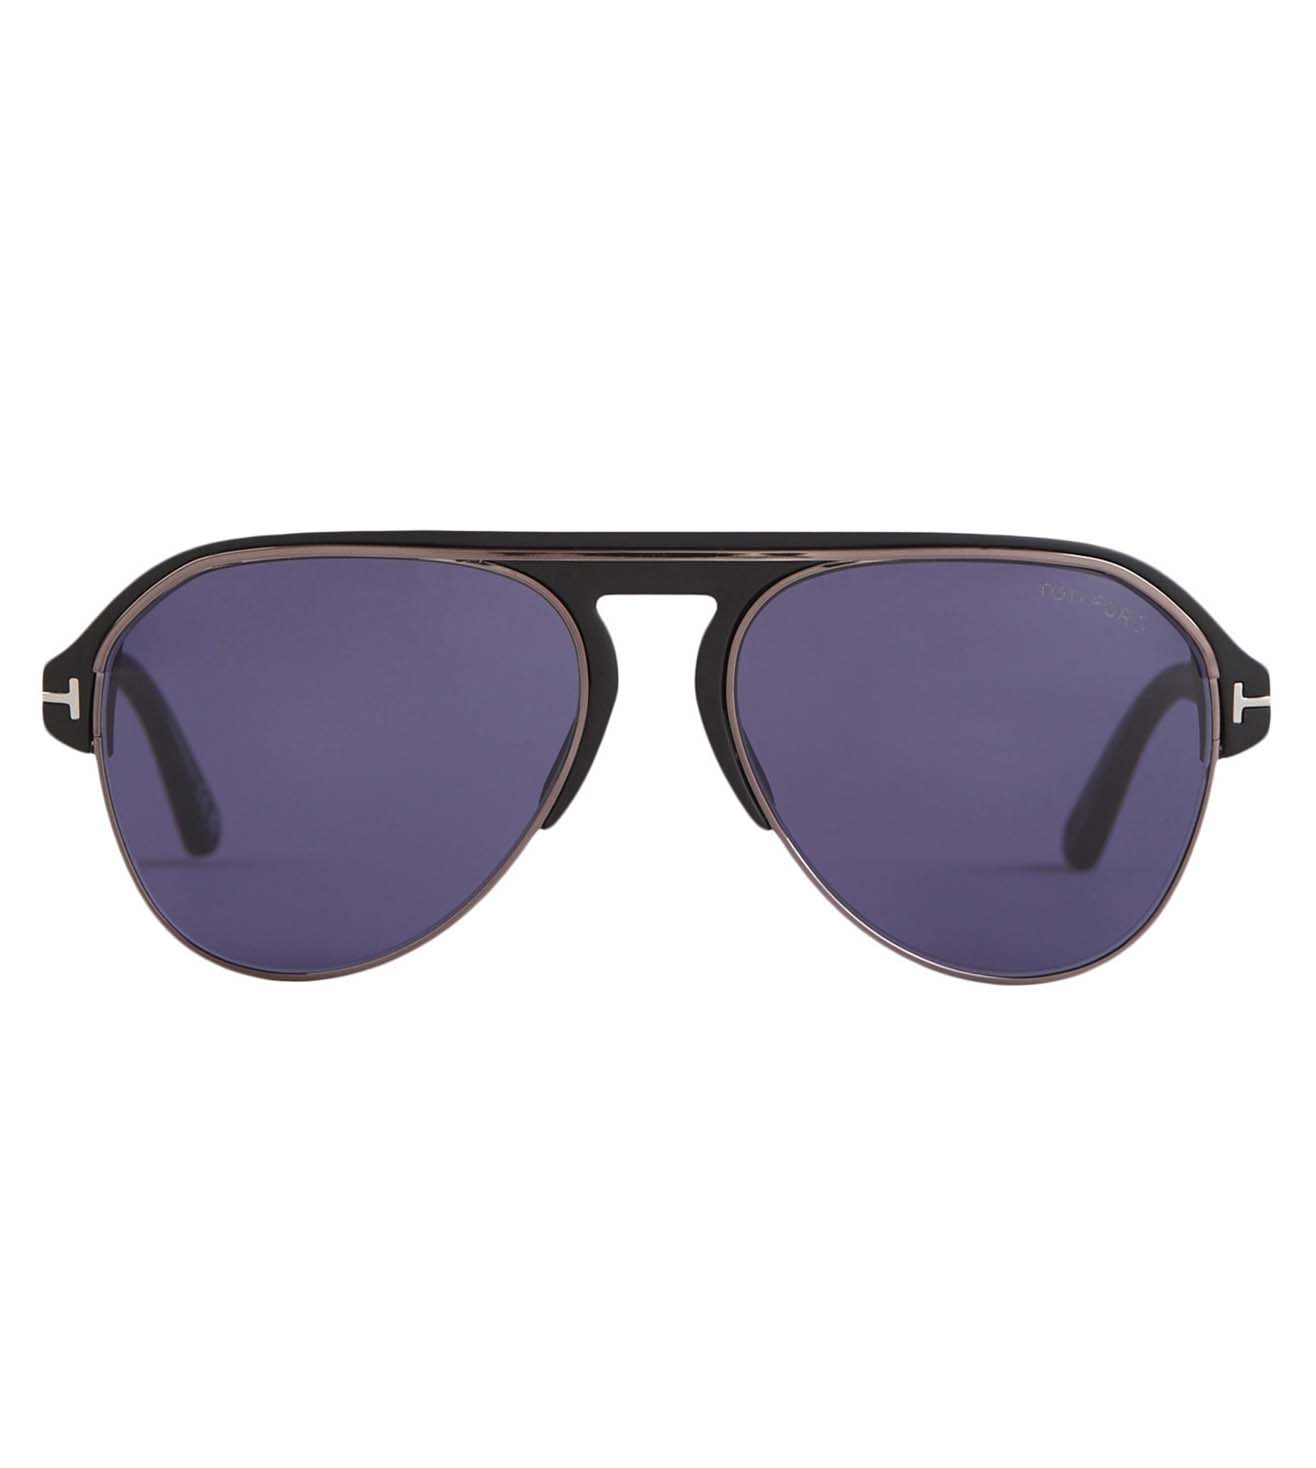 Tom Ford Men's Blue Aviator Sunglasses